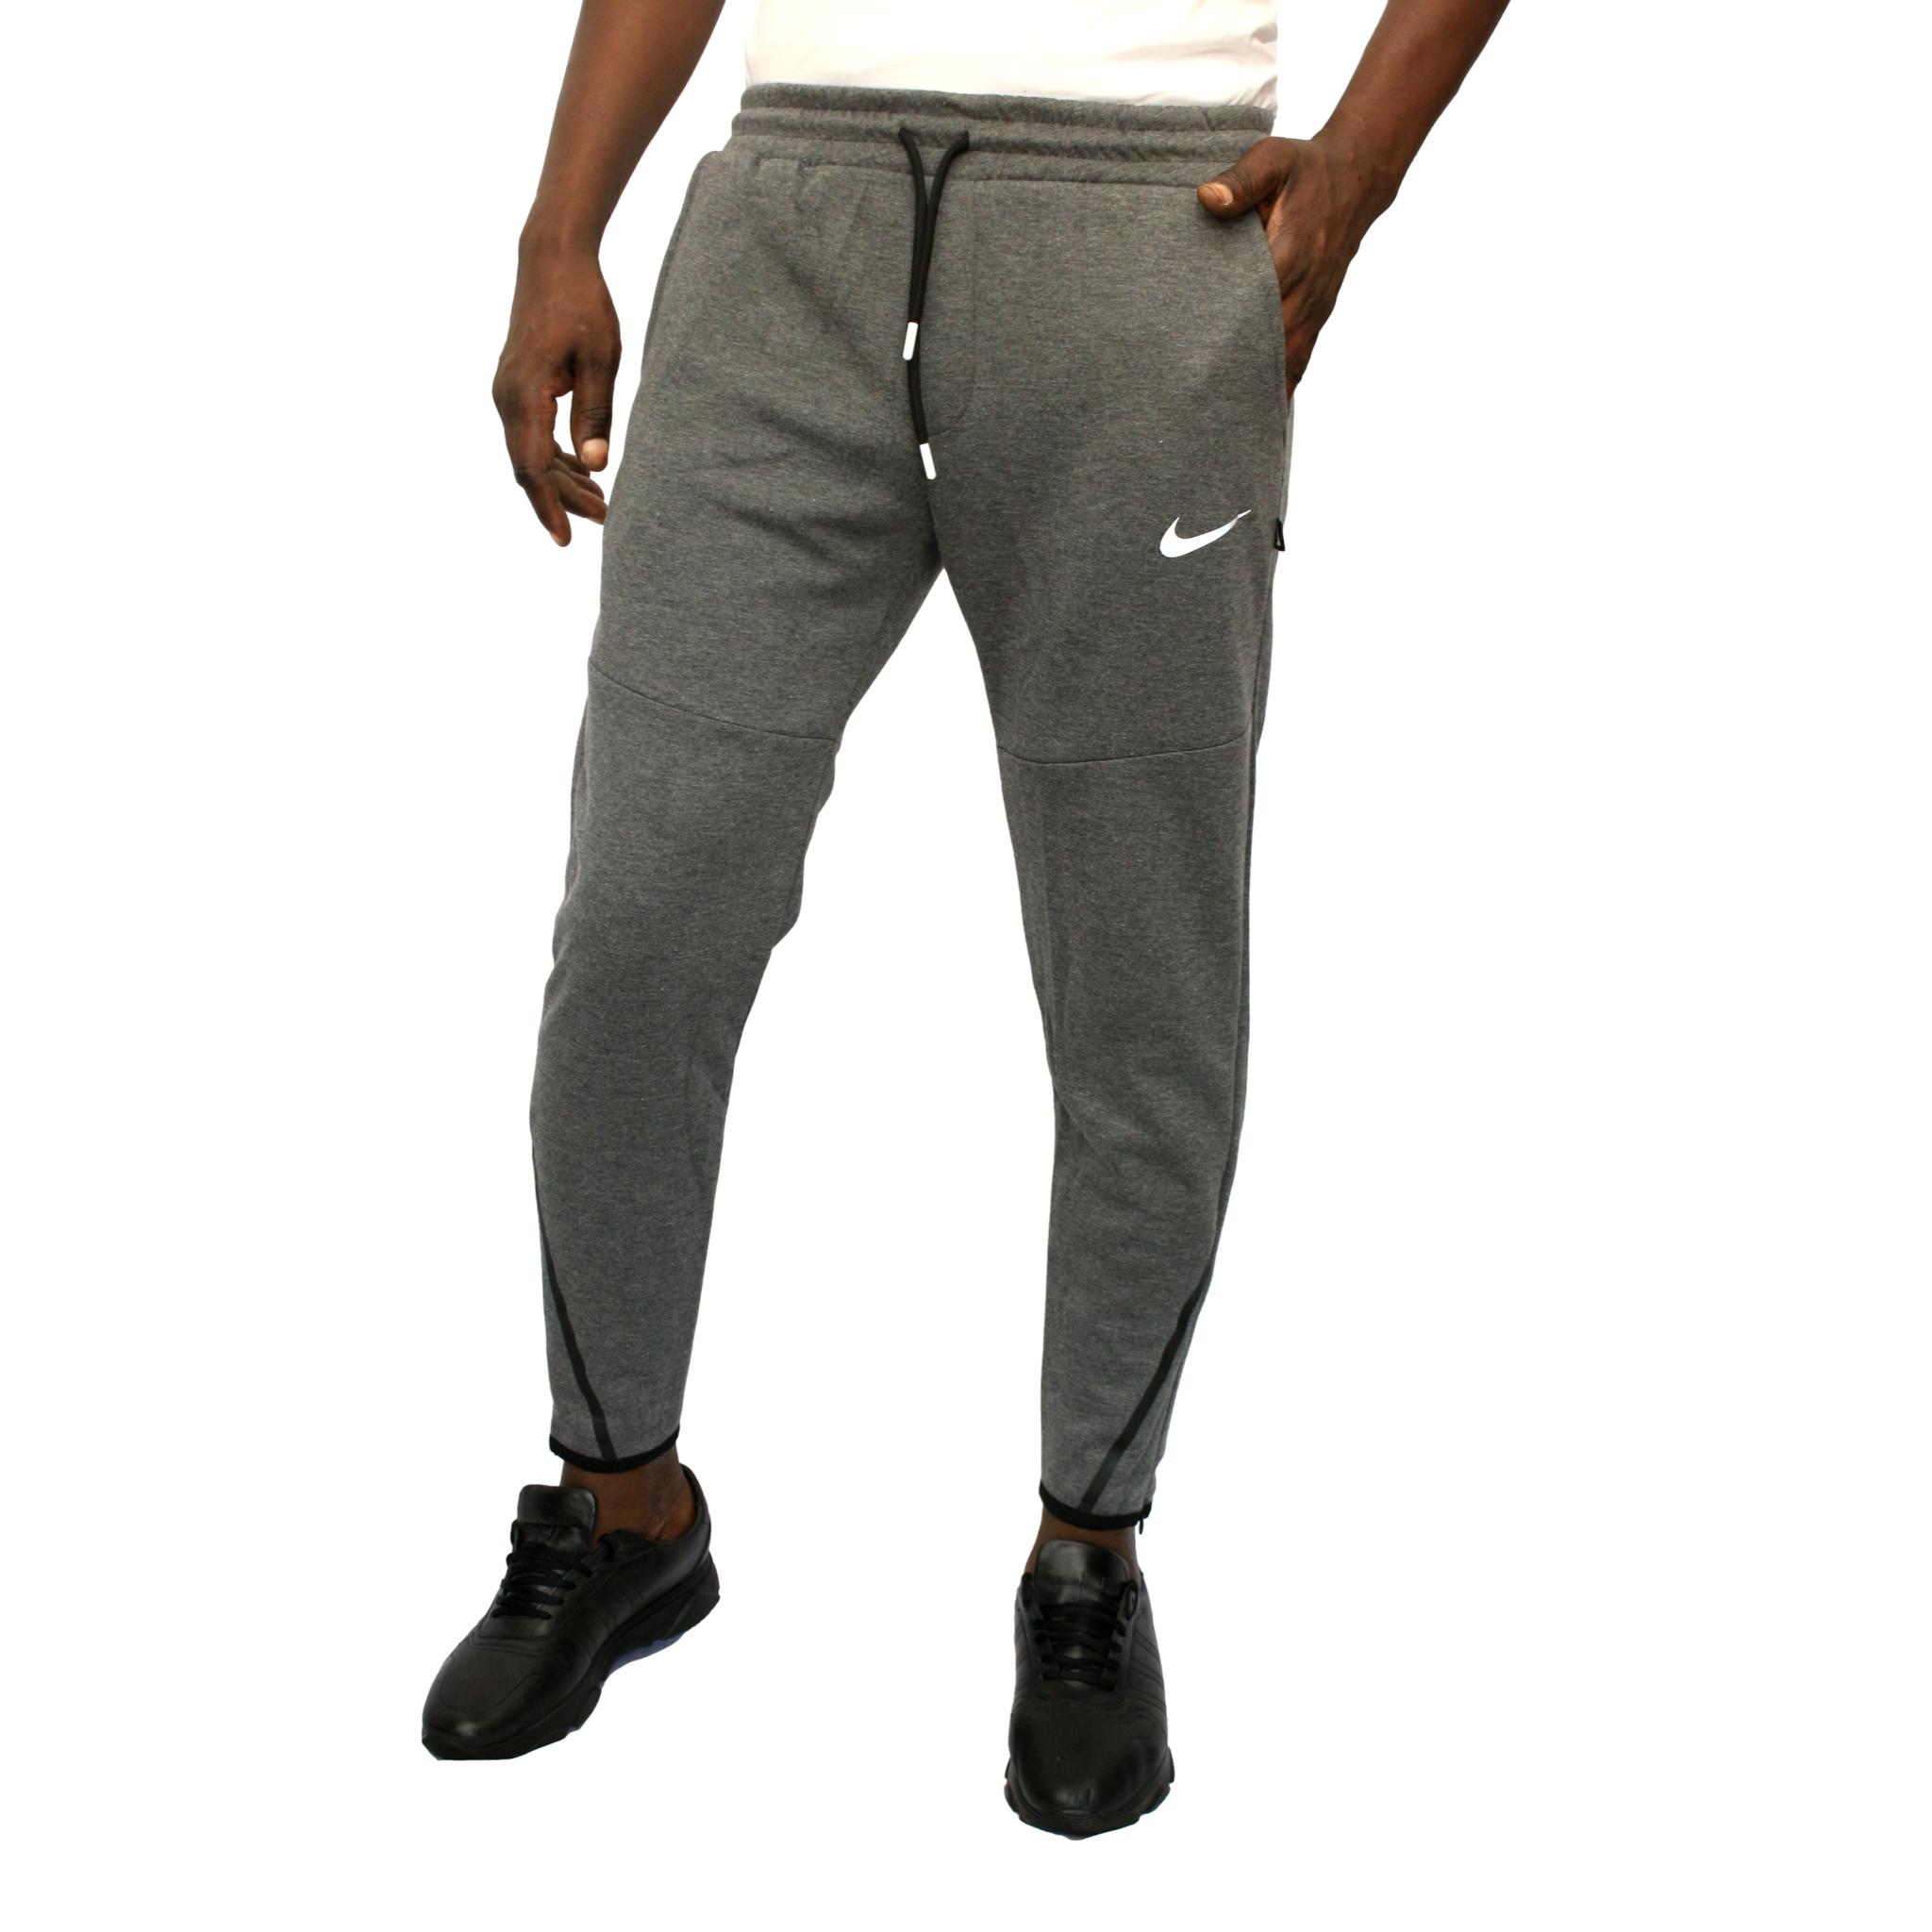 Pantalon jogging Nike Homme - AmChou Boutique - AmChou